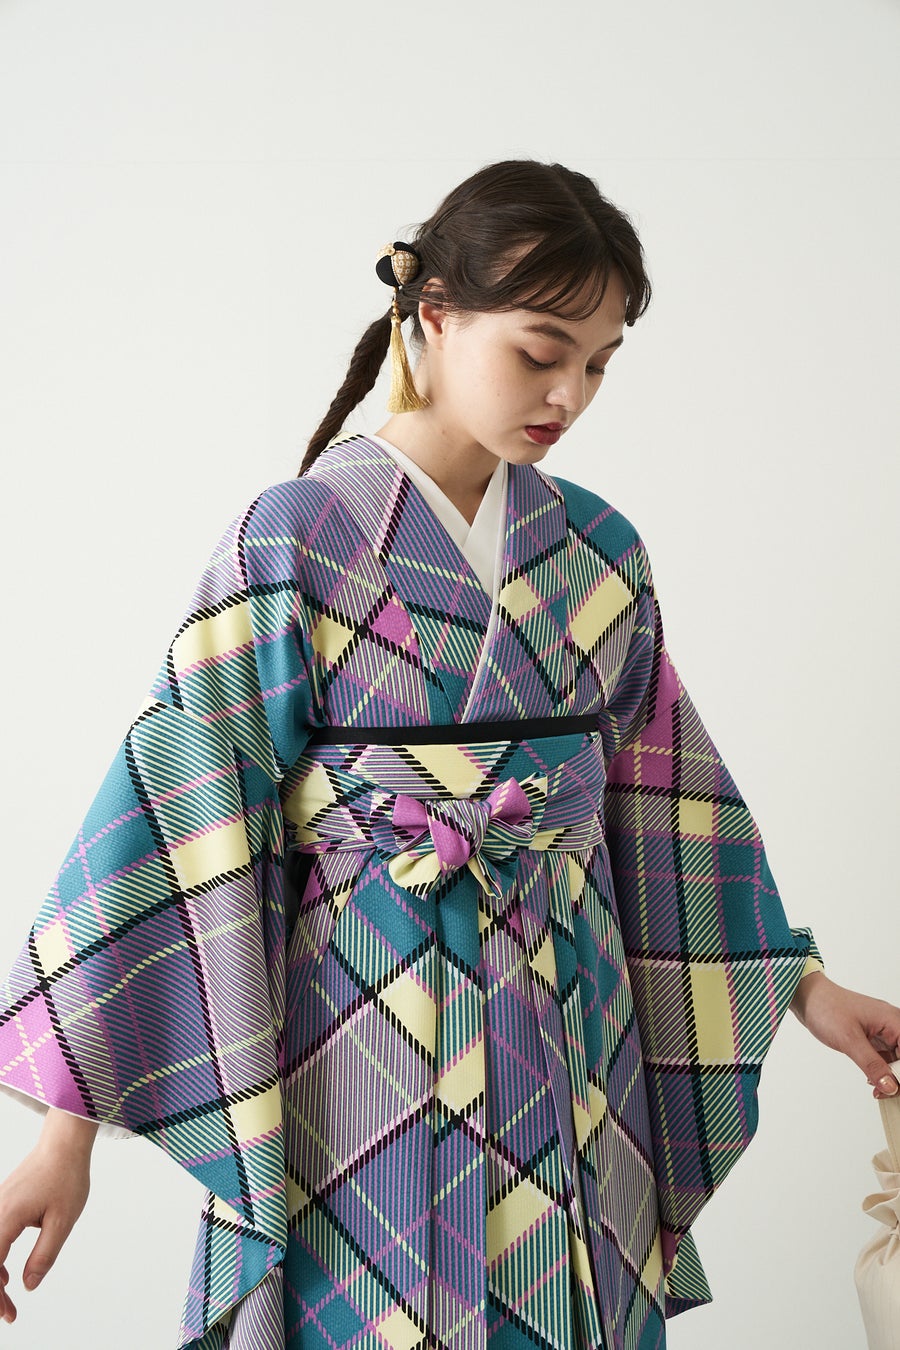 KIMONO by NADESHIKO＞マドラスチェックの袴を加えた新作「わたしの ...